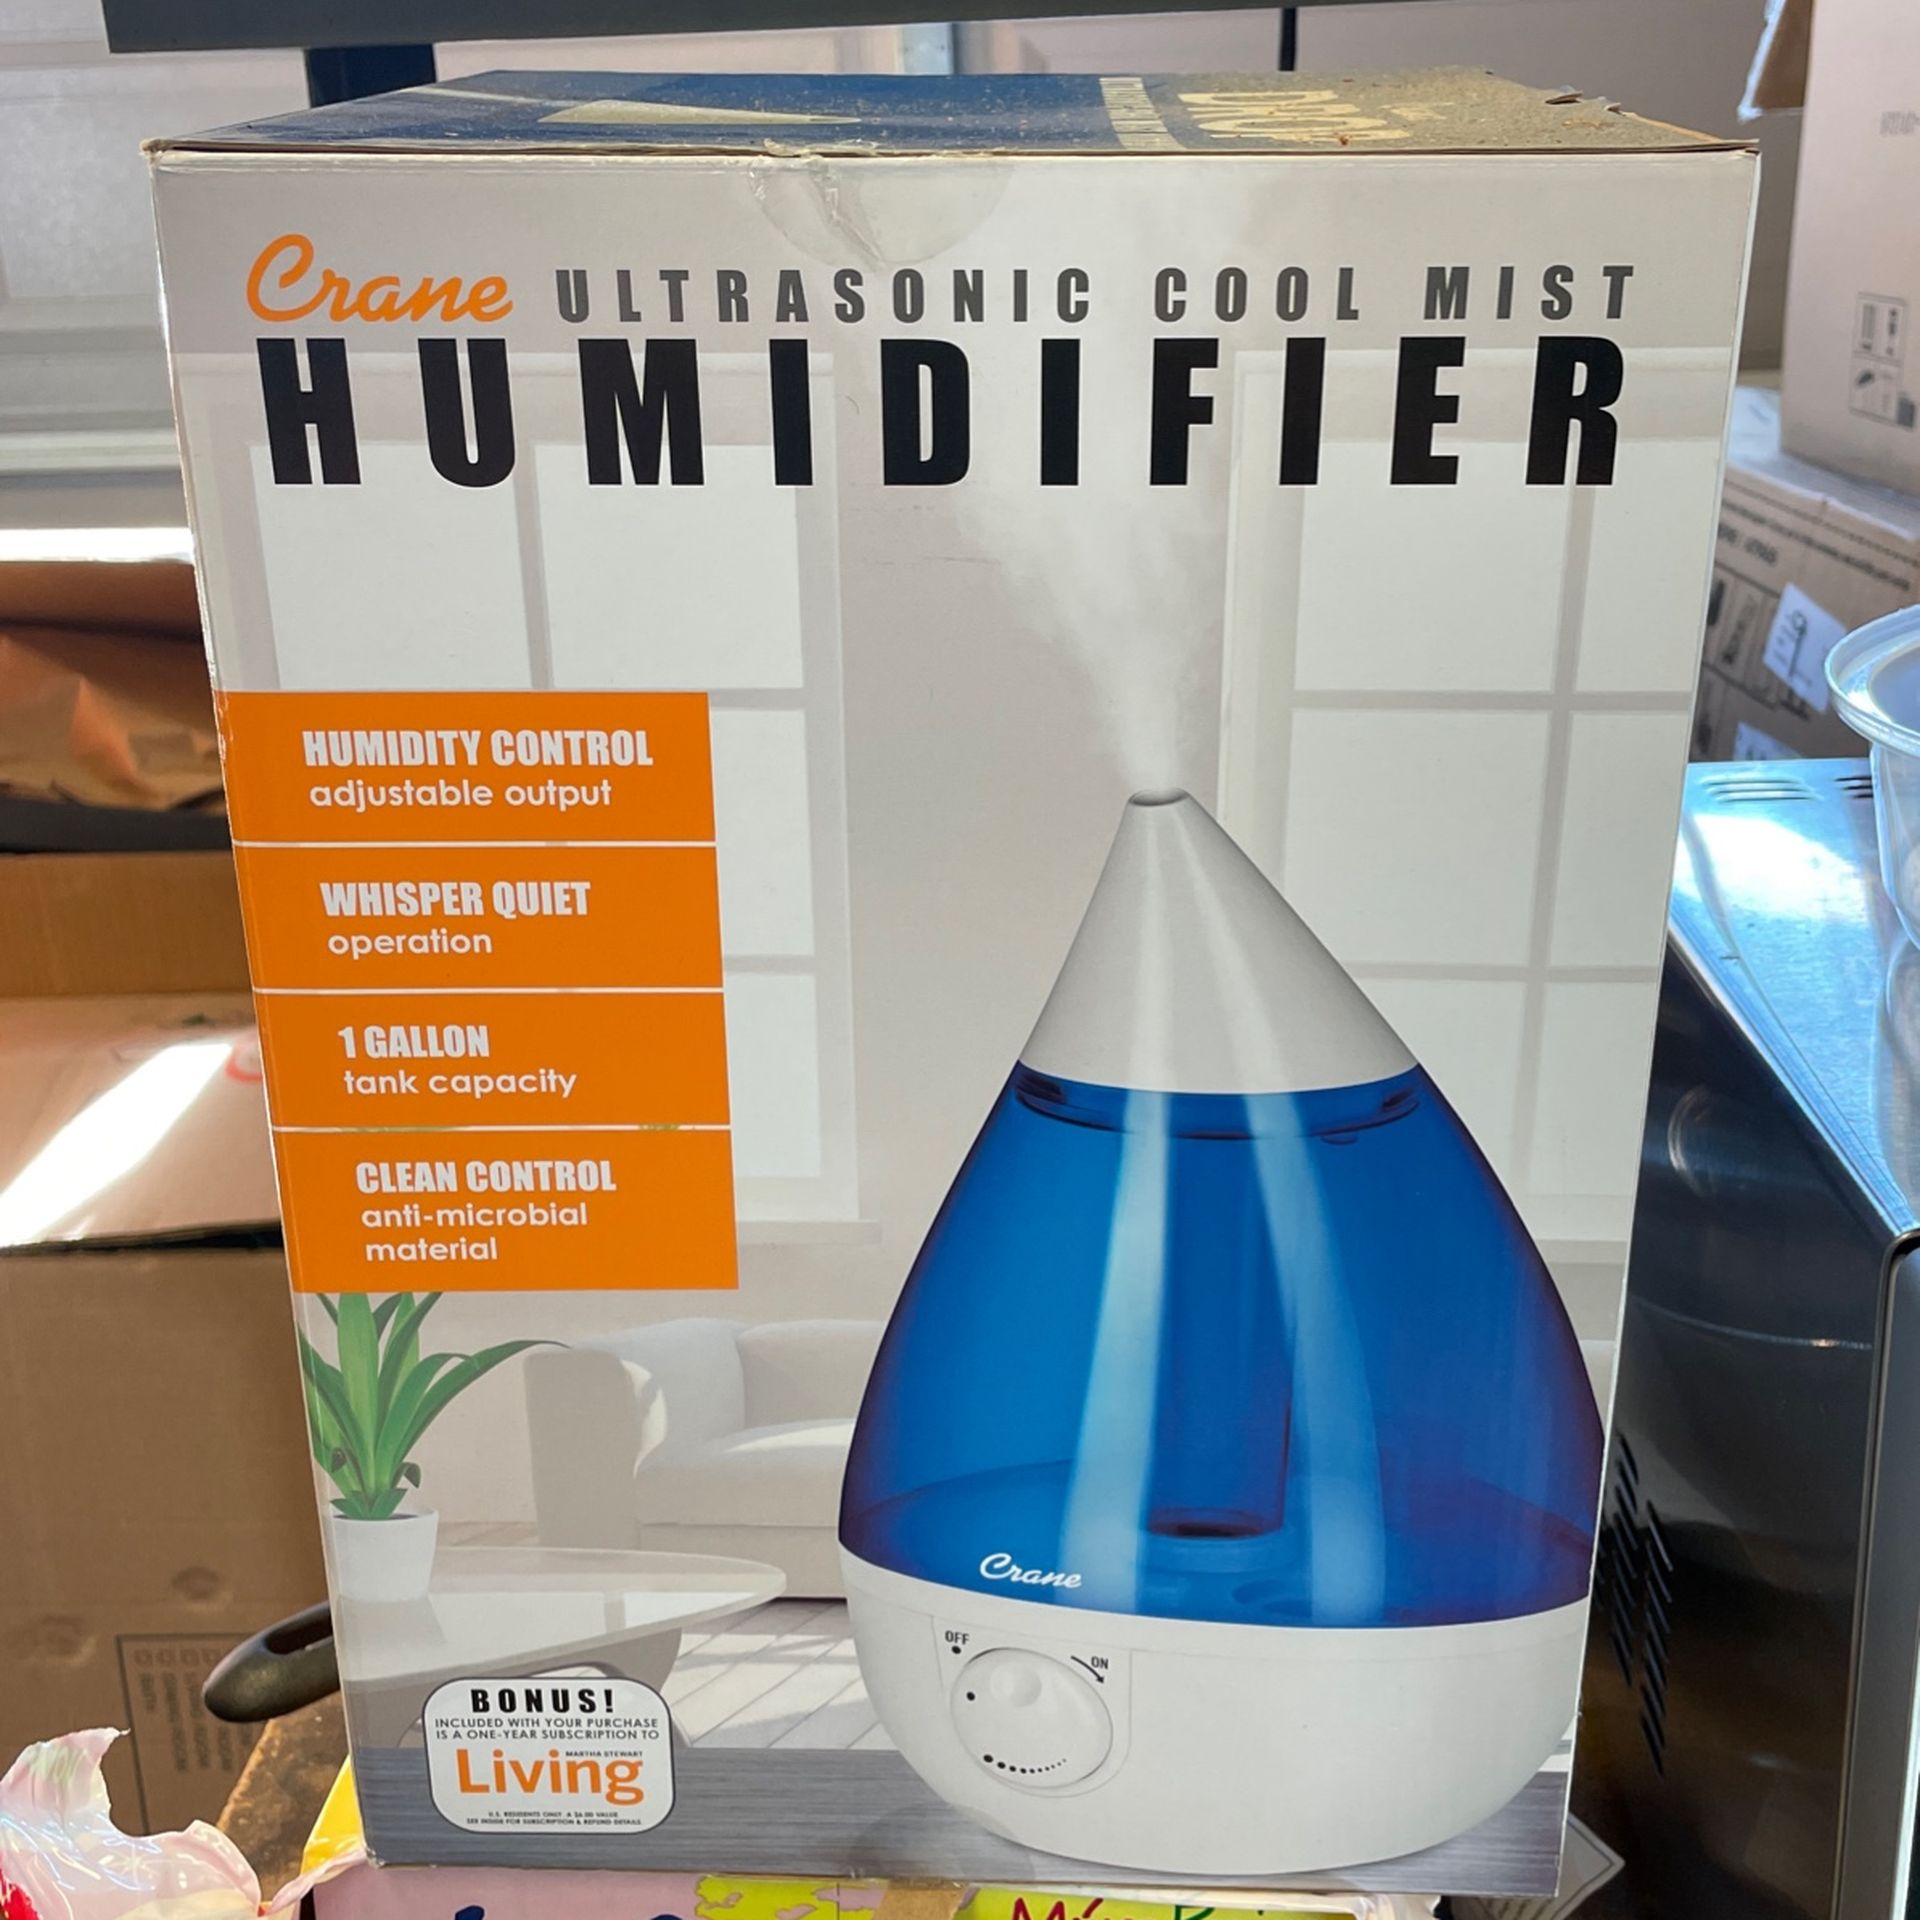 Crane Humidifier